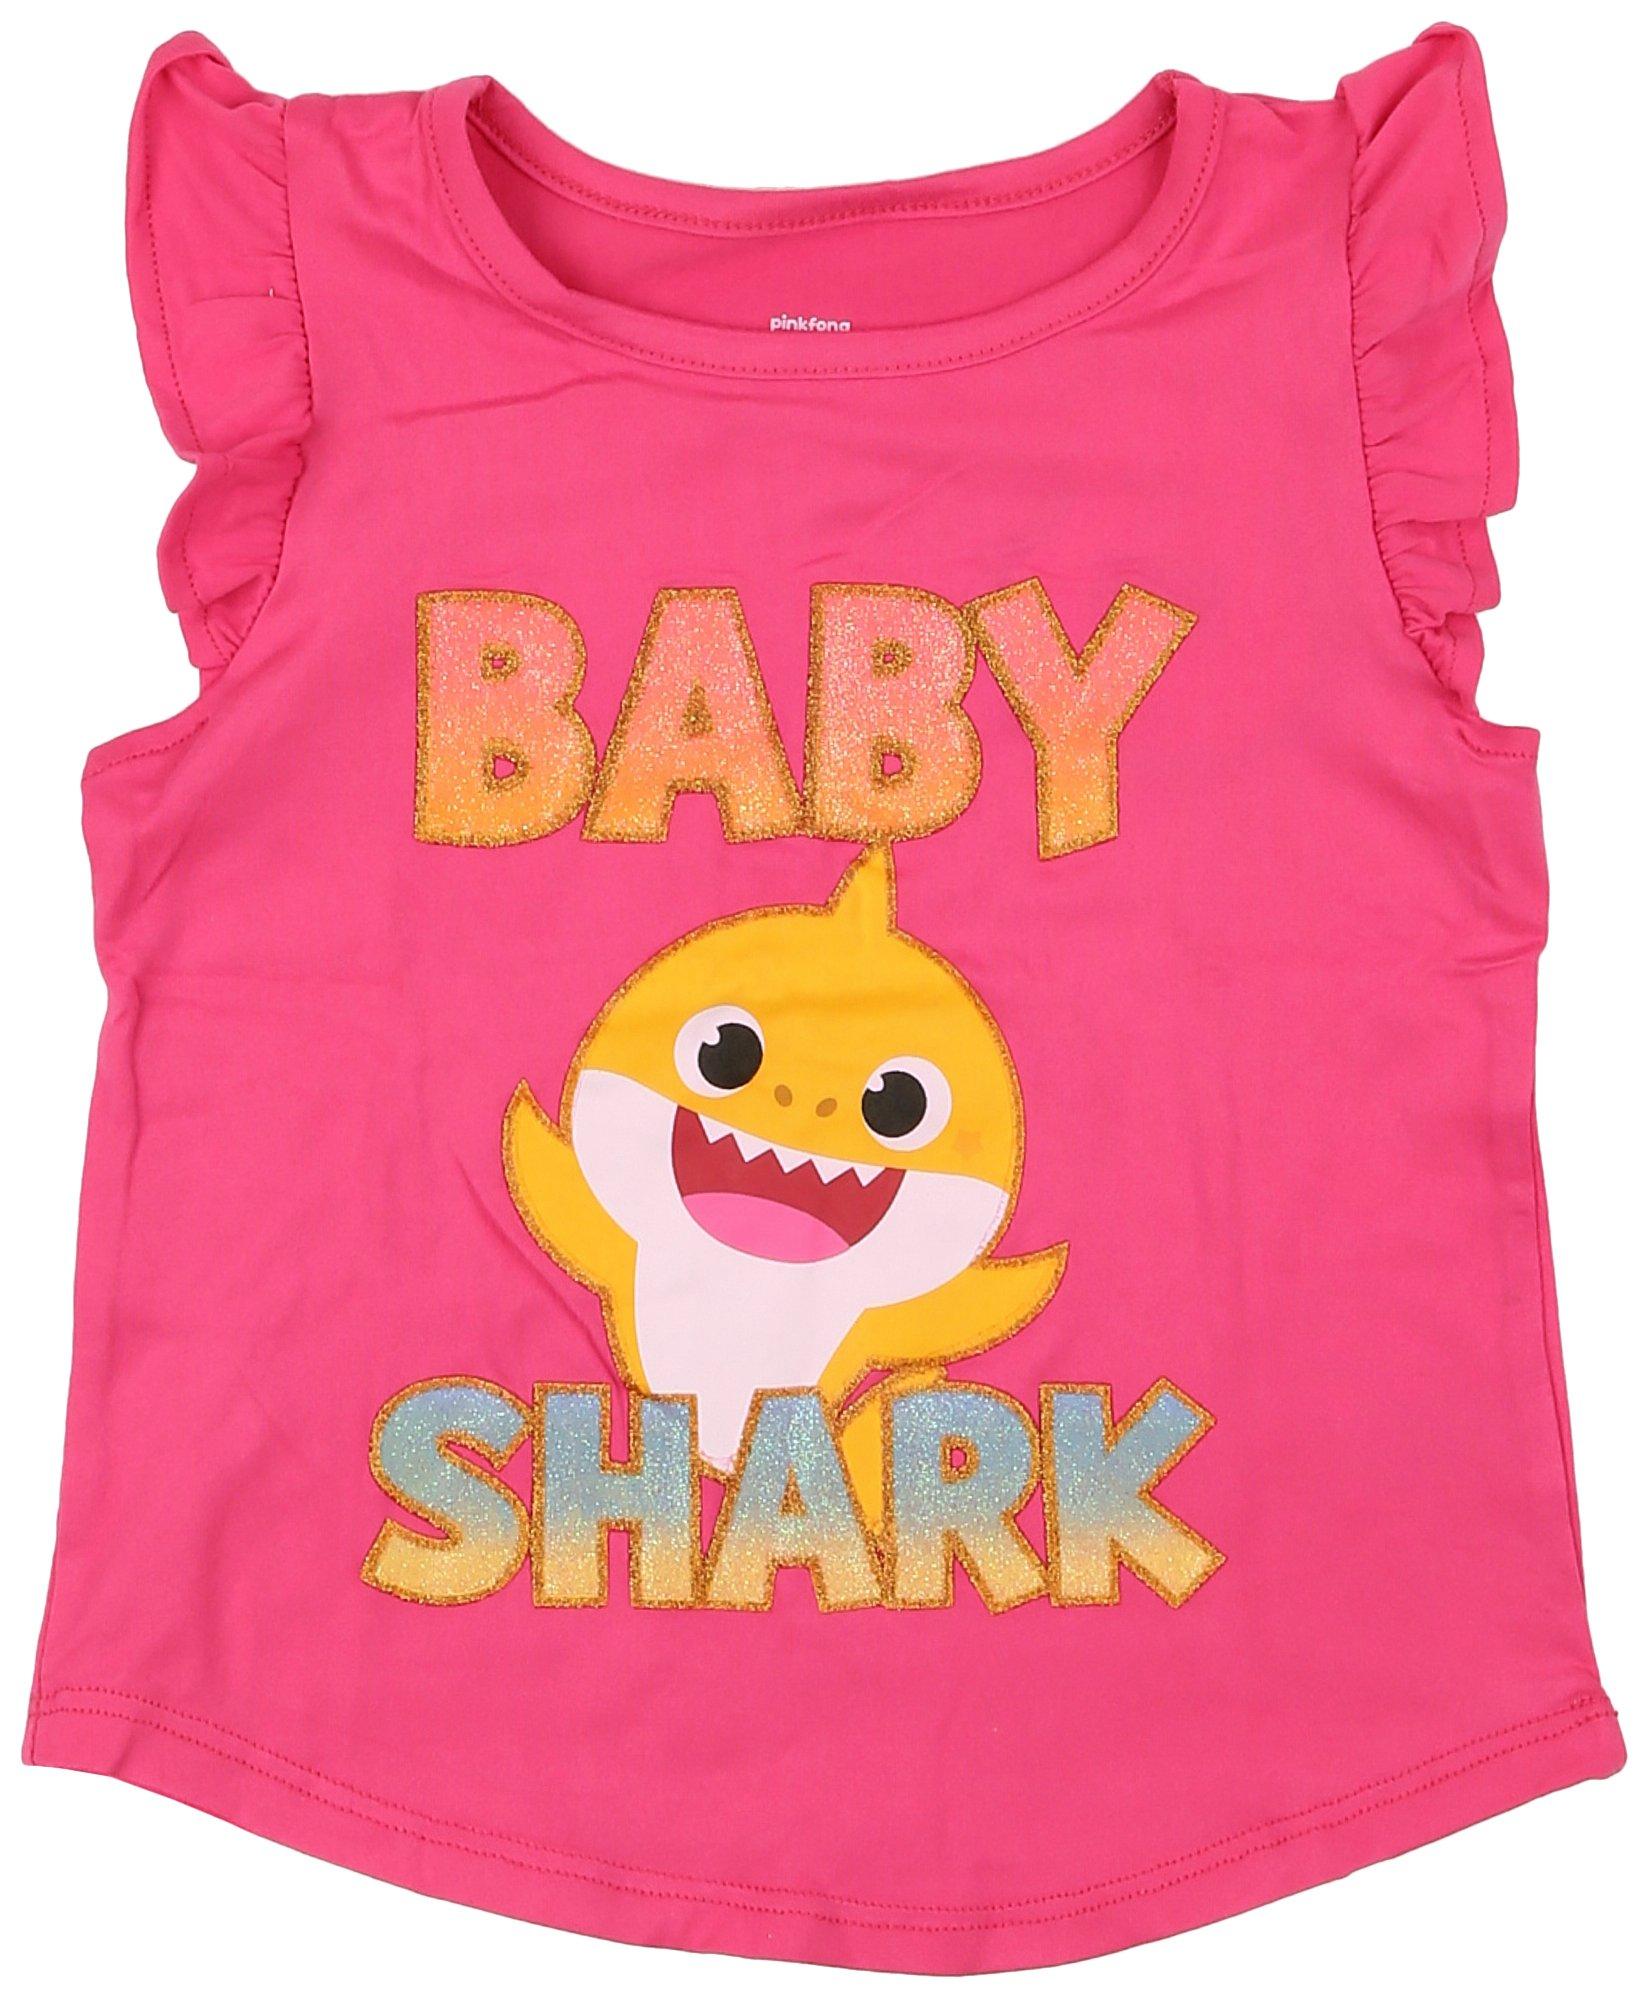 Toddler Boys Baby Shark Ruffle Short Sleeve T-Shirt